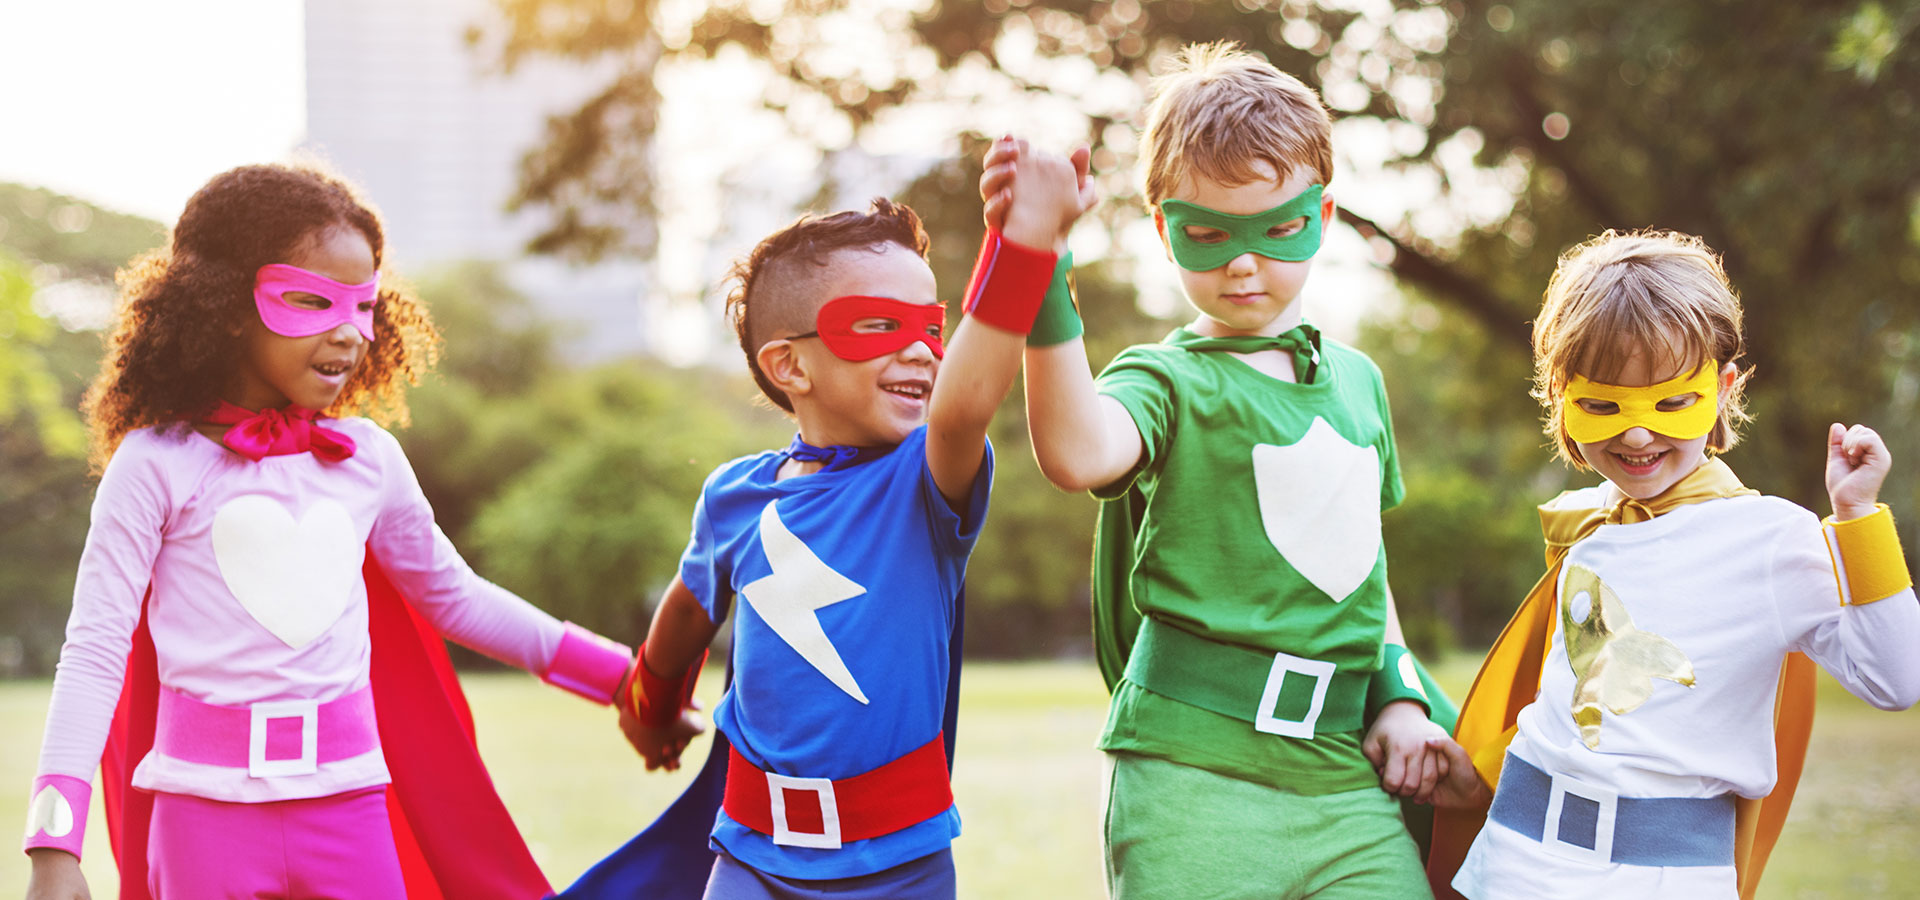 Children as superheros